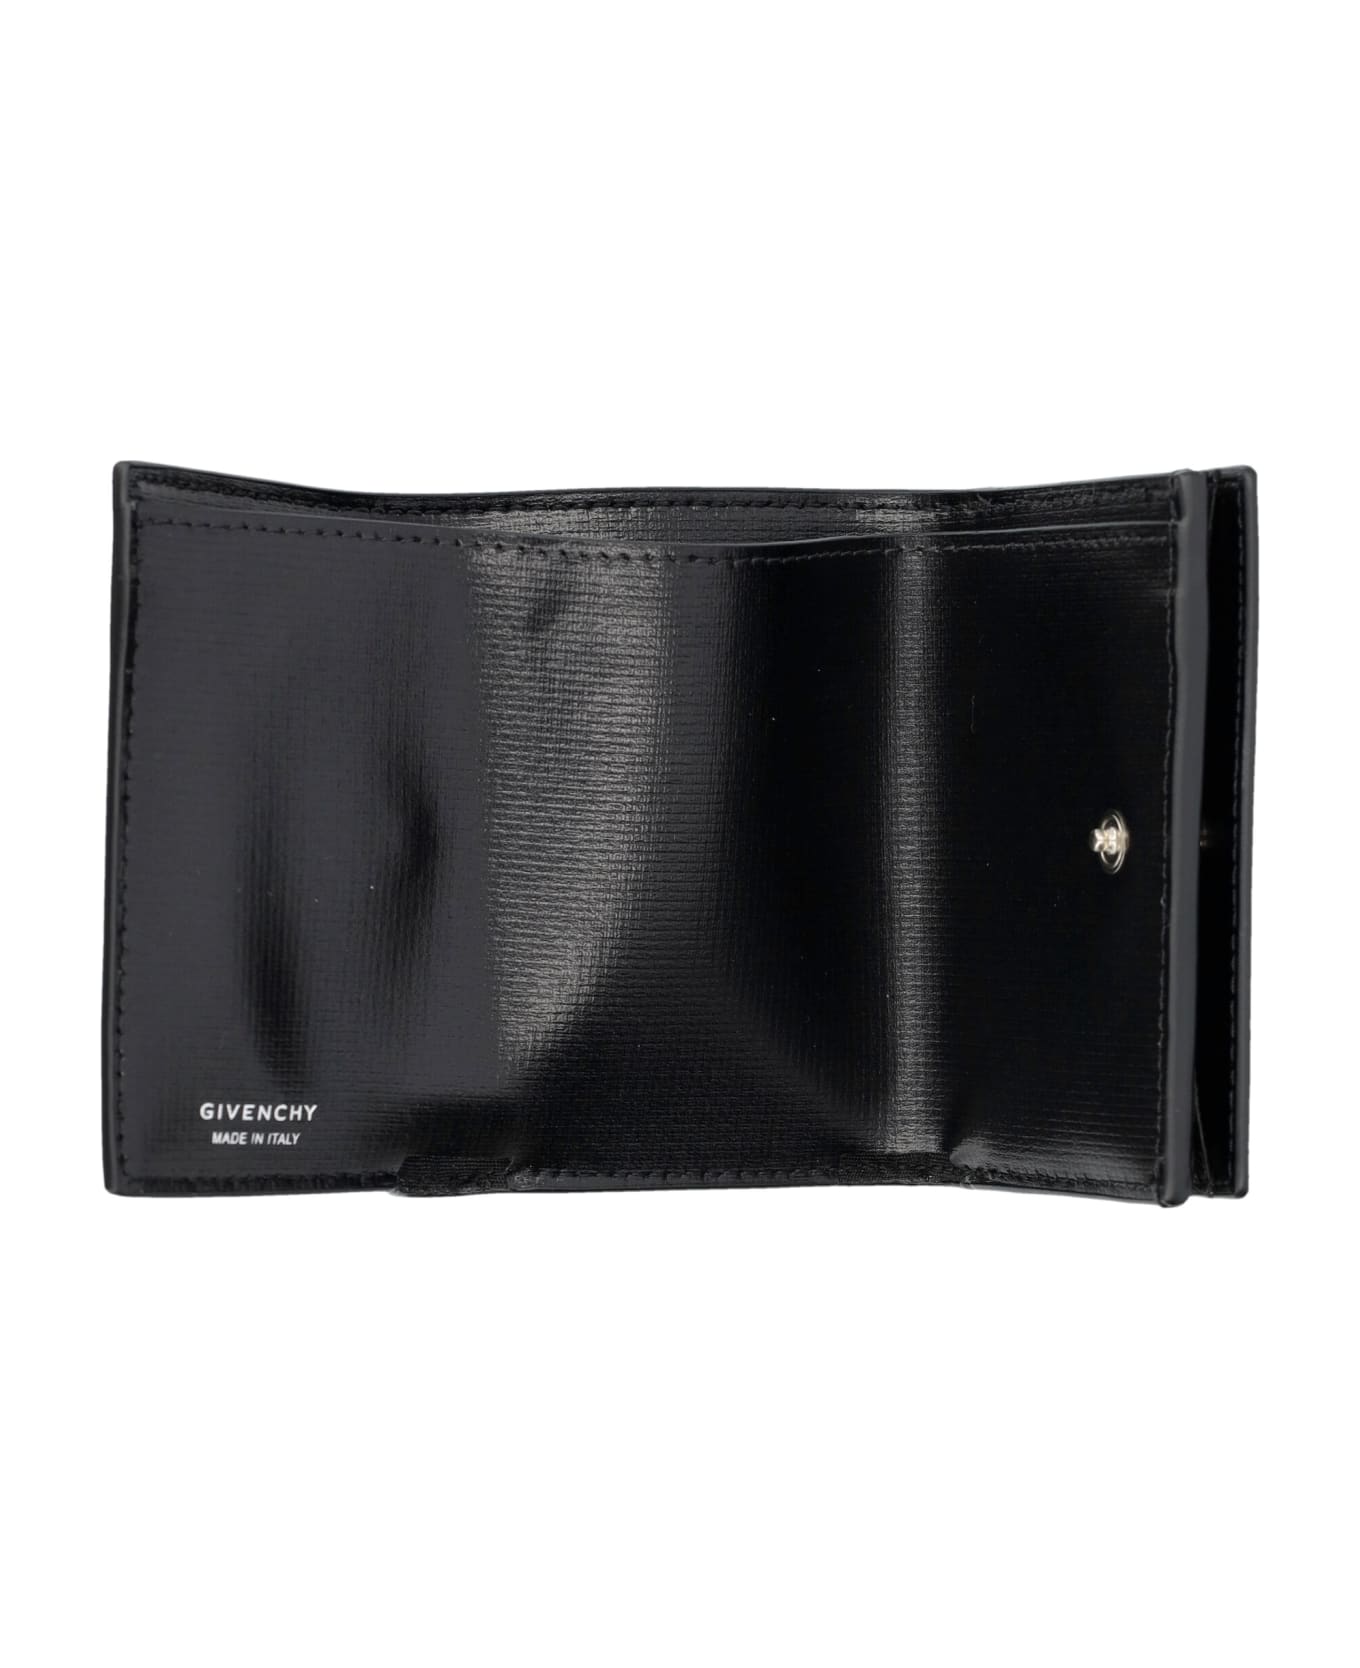 Givenchy Compact Wallet - NAVY/BLACK